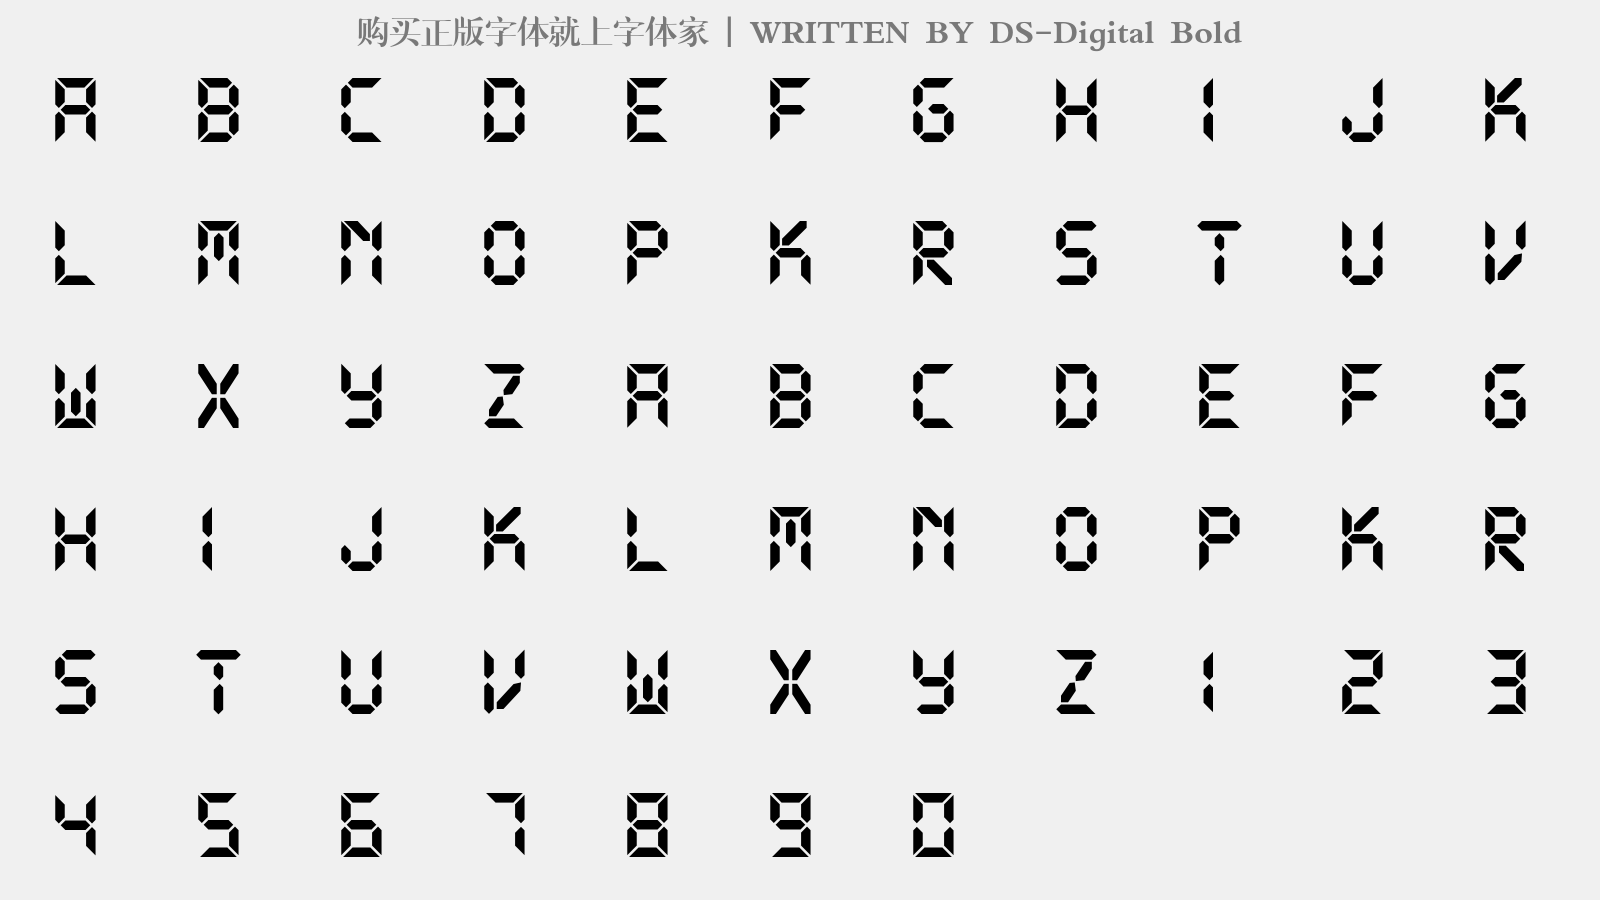 DS-Digital Bold - 大写字母/小写字母/数字